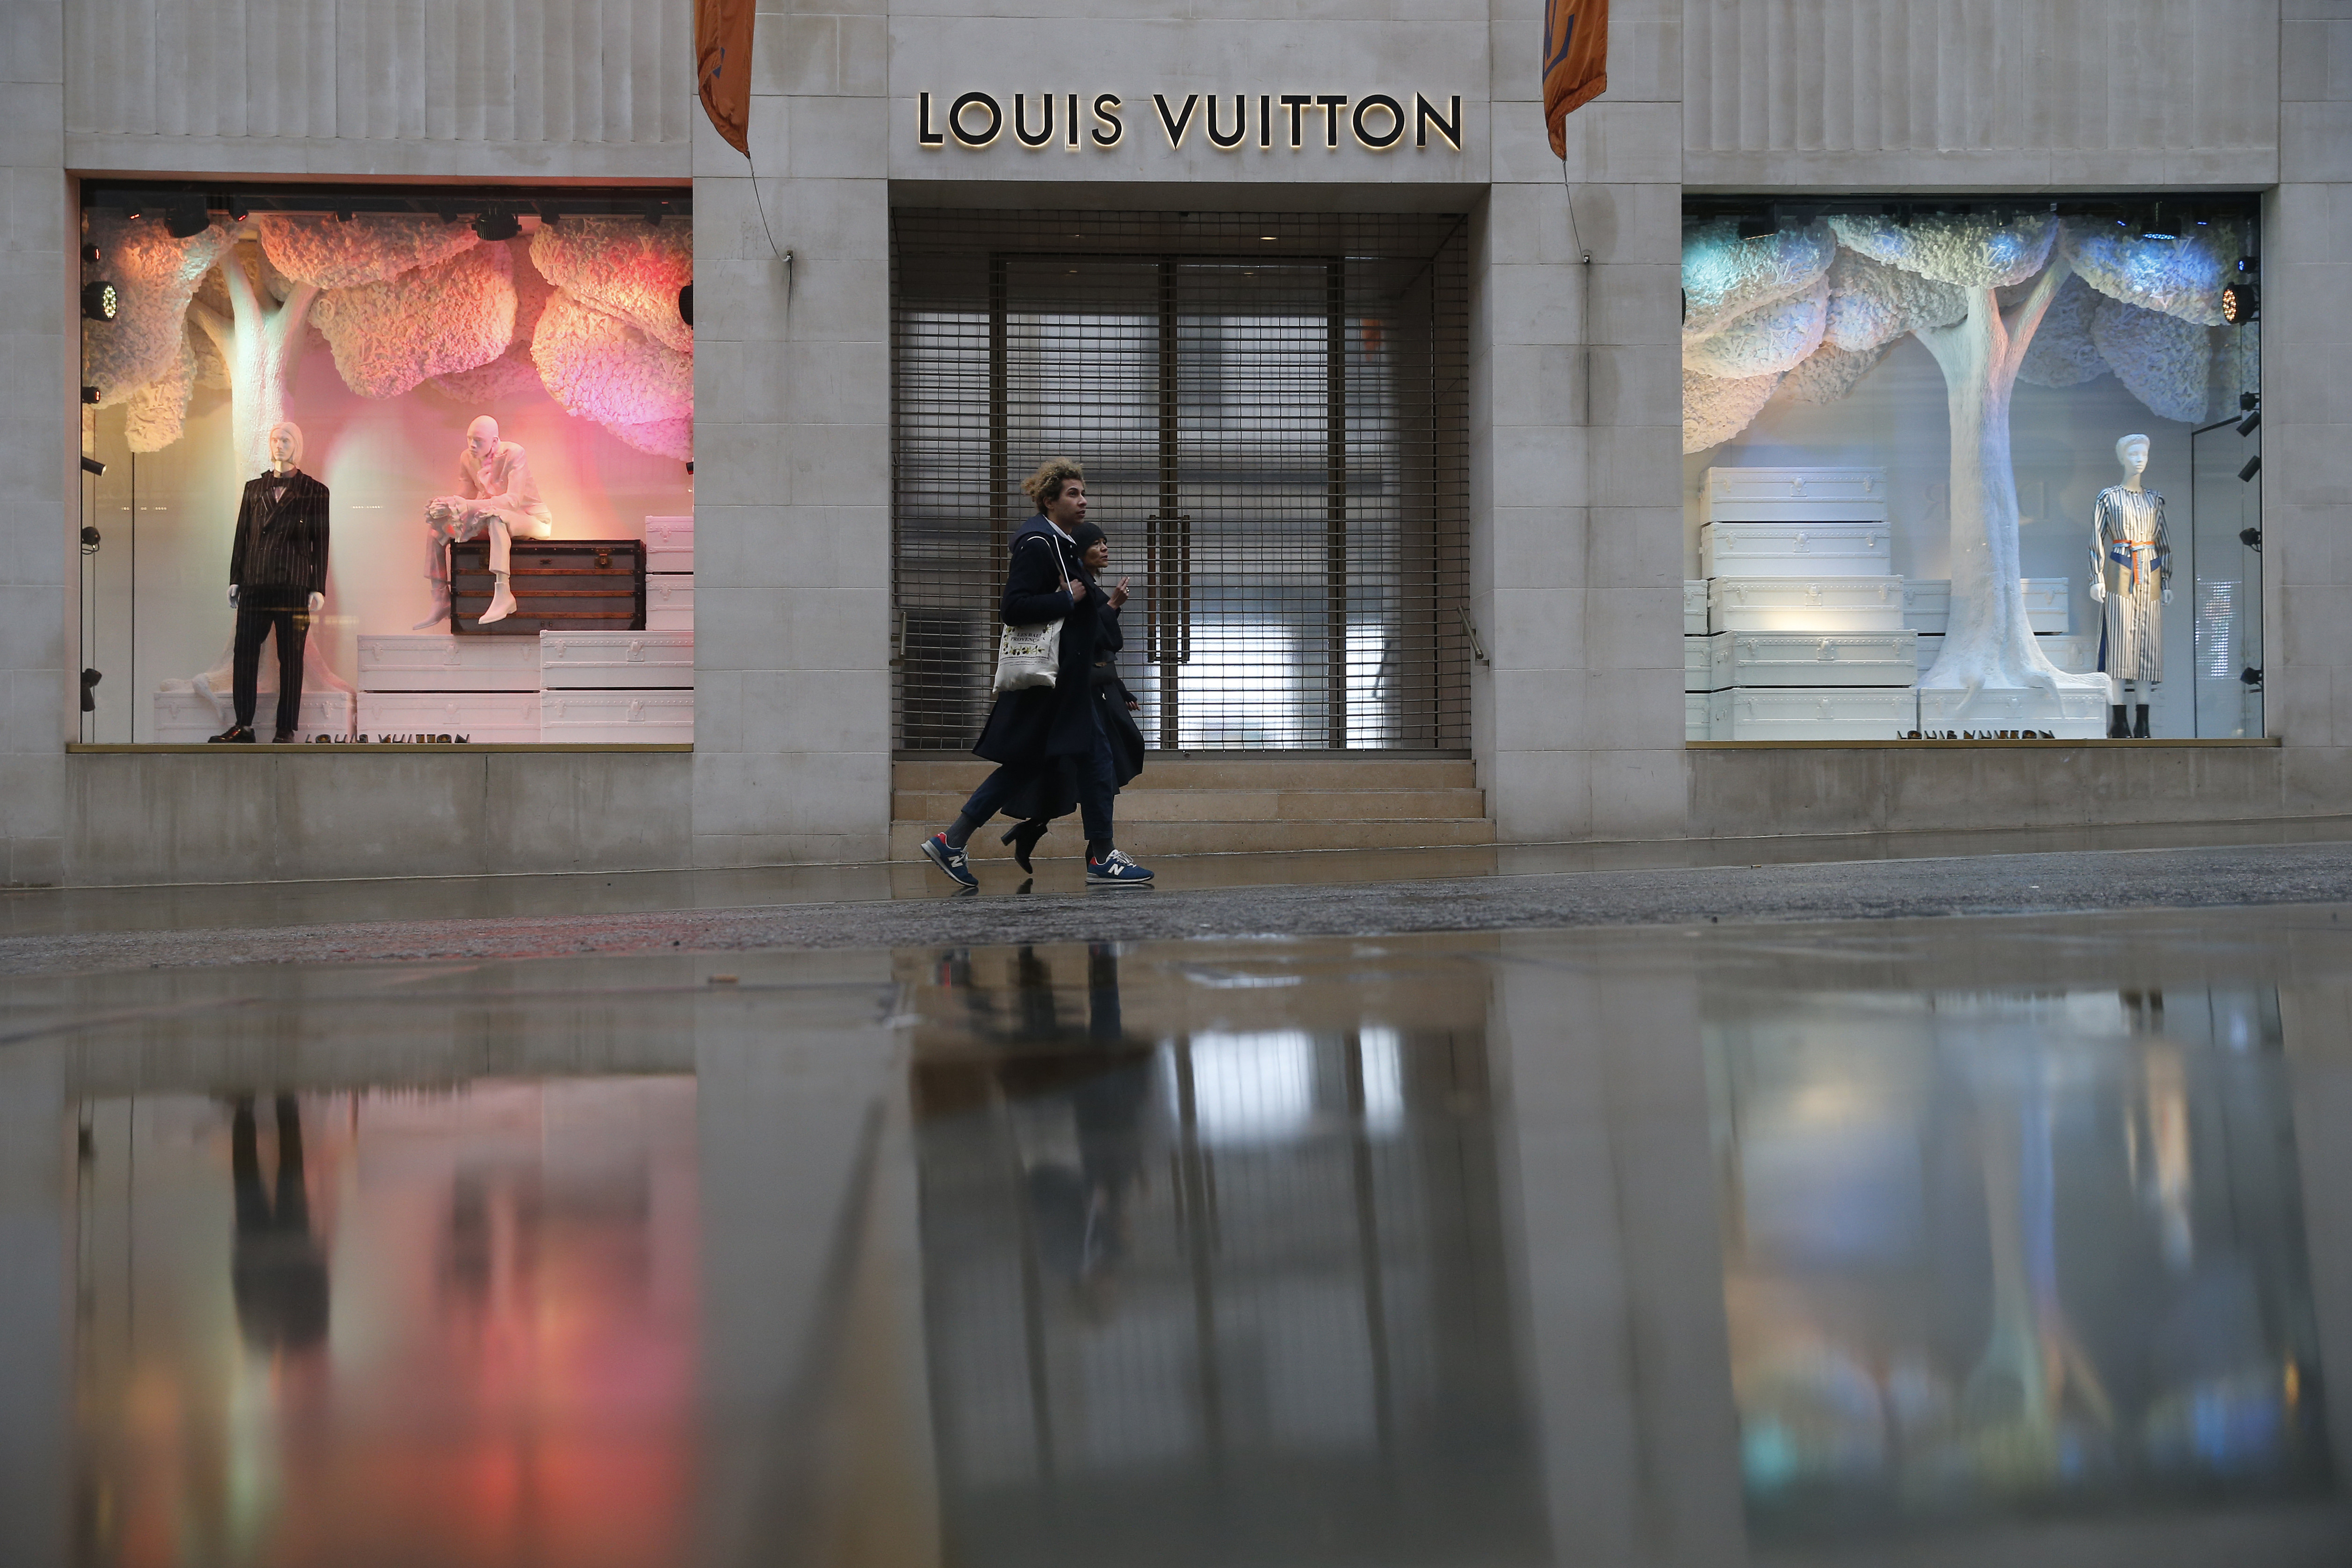 TOKYO, Japan - A sales clerk shows a Louis Vuitton merchandise at